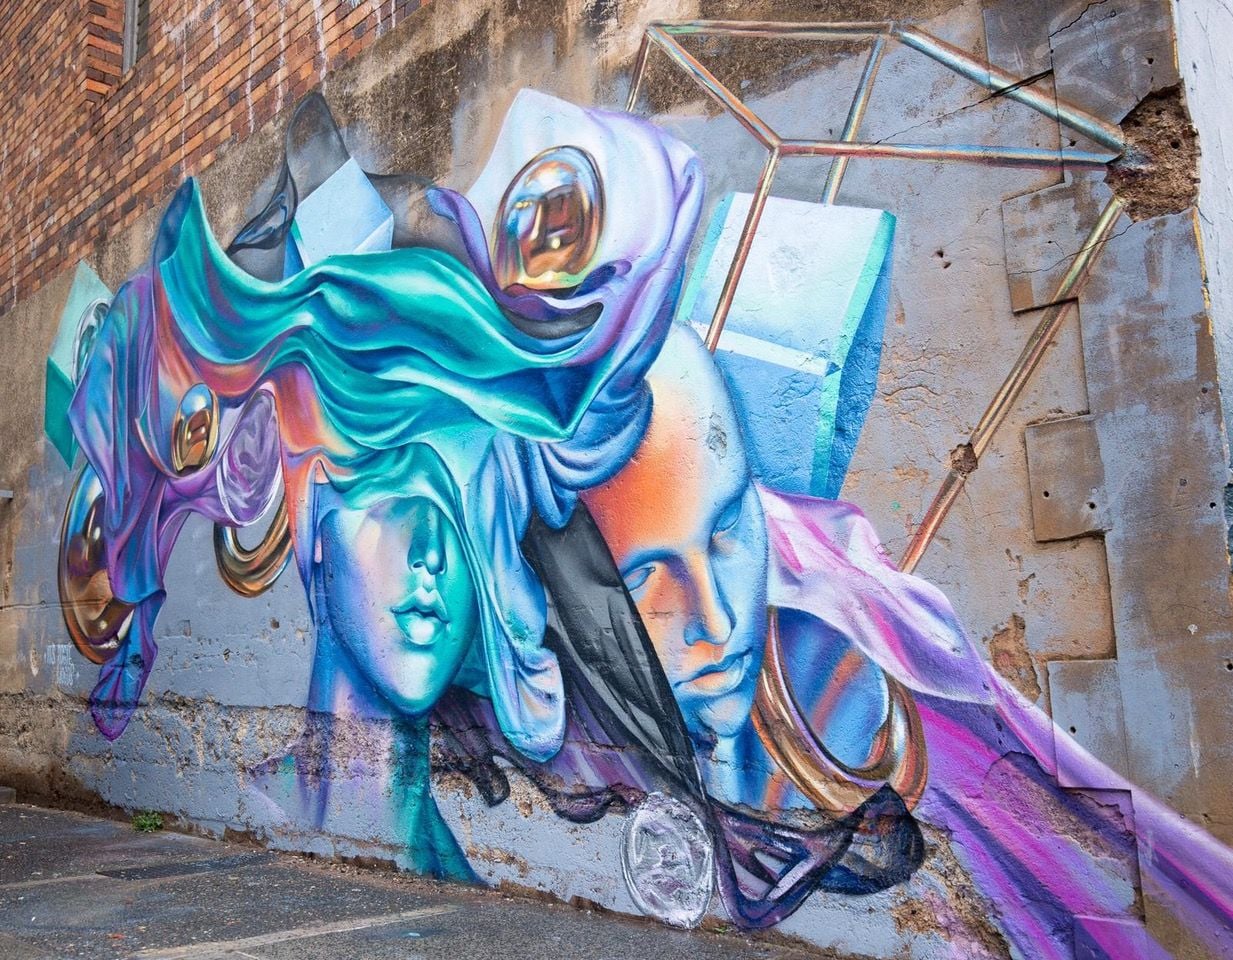 2018 Brisbane mural from street artist Rosie Woods. 